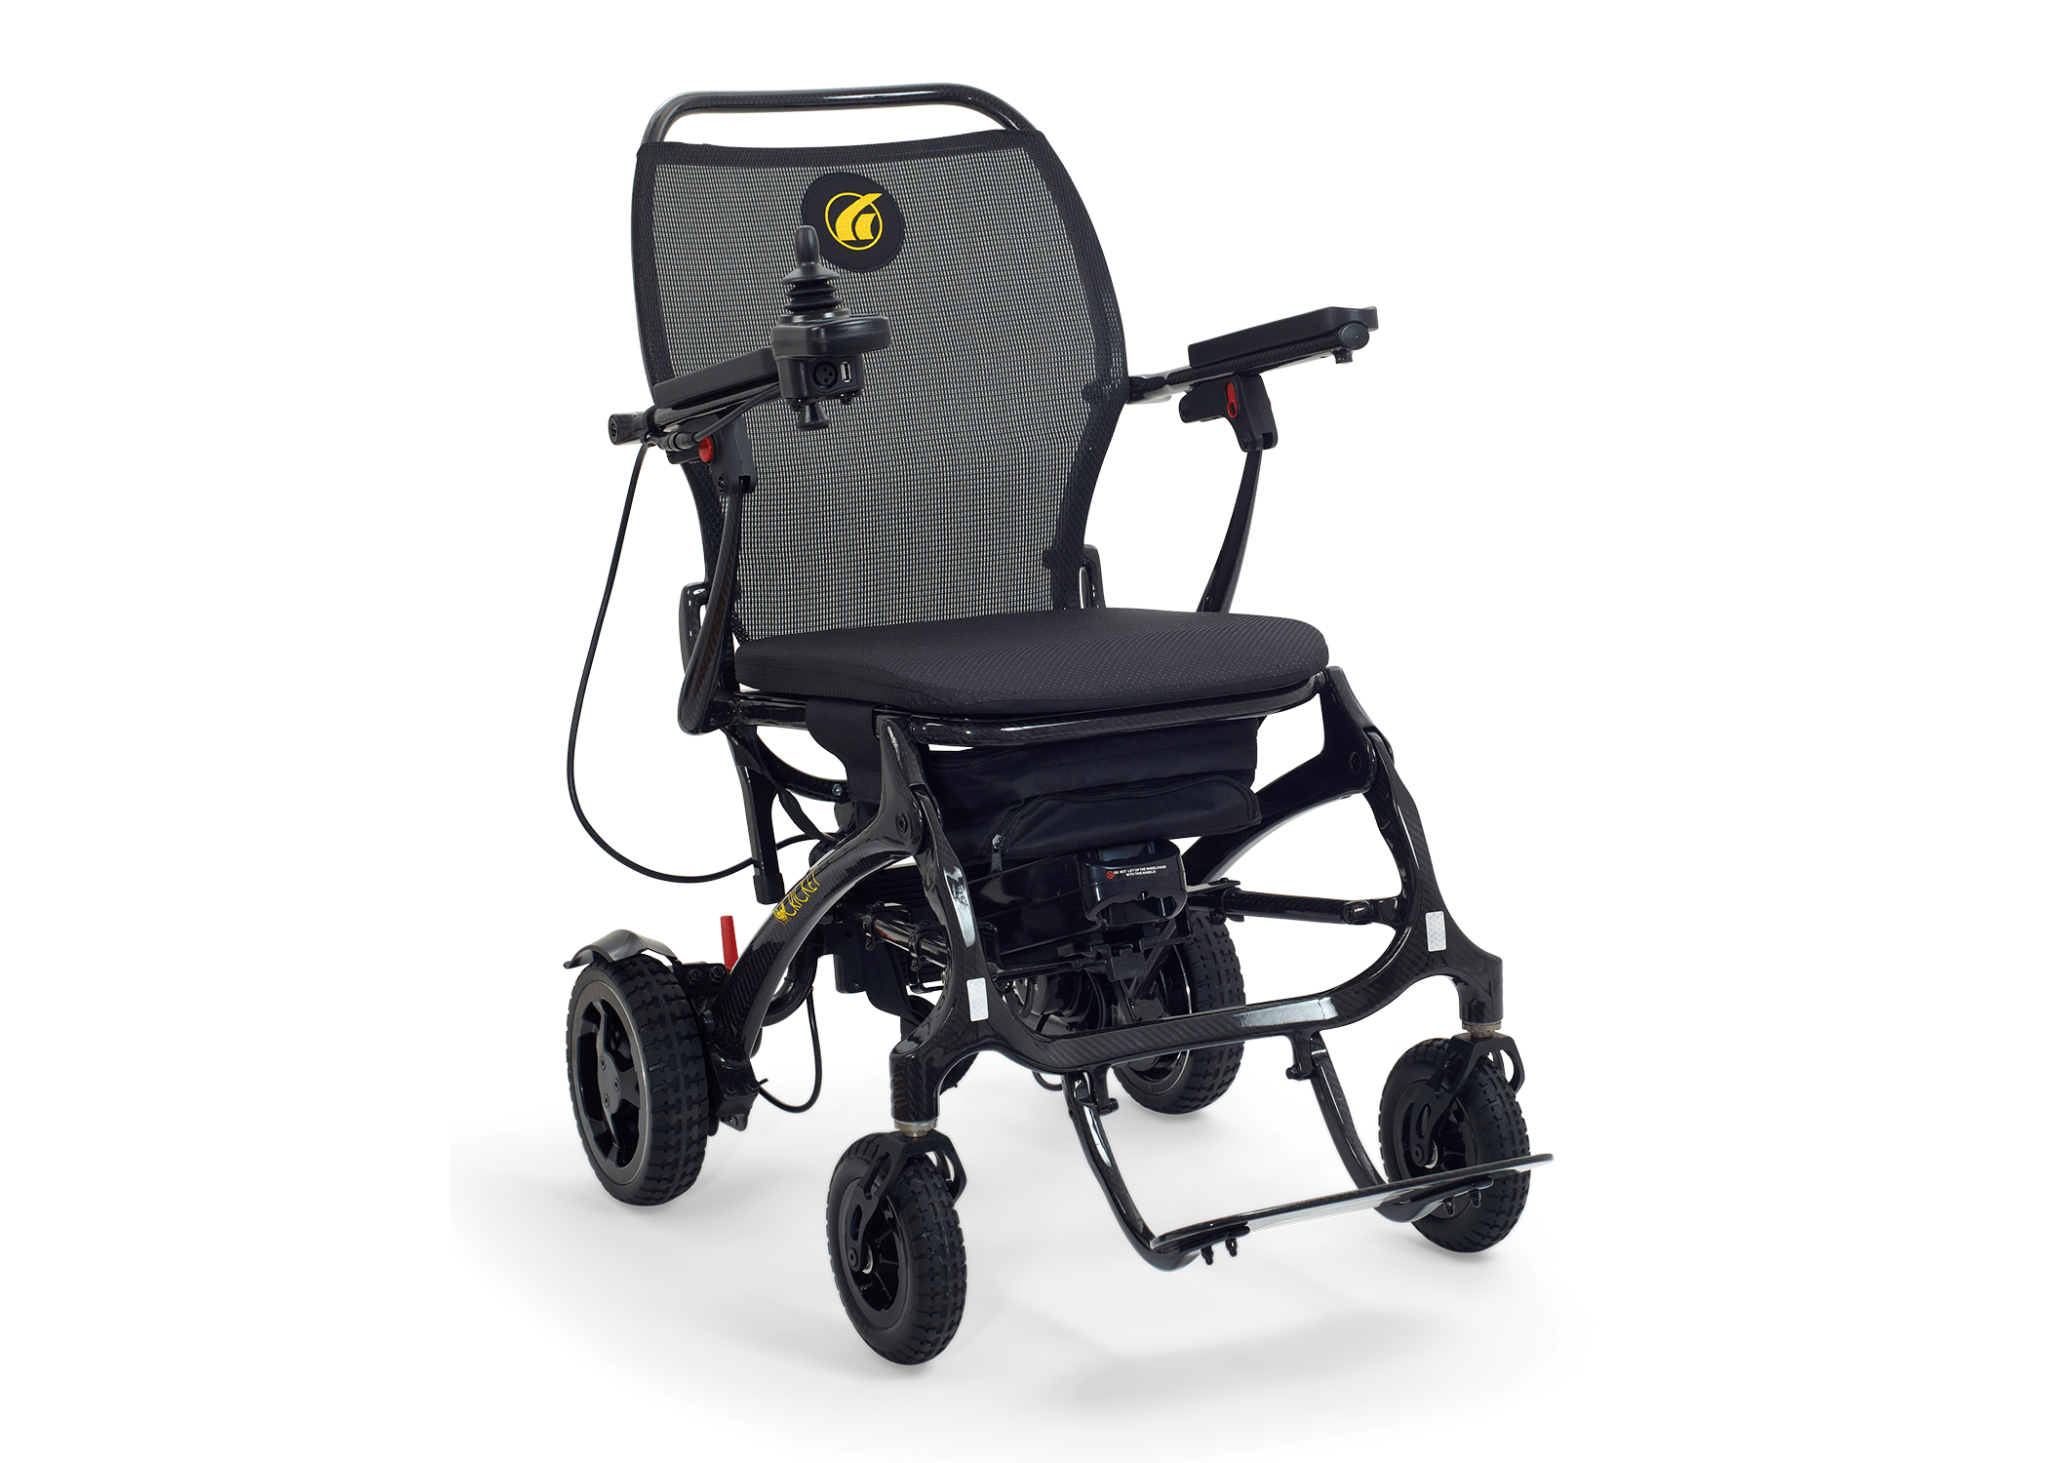 The New Golden Cricket Travel Carbon Fiber Power Wheelchair